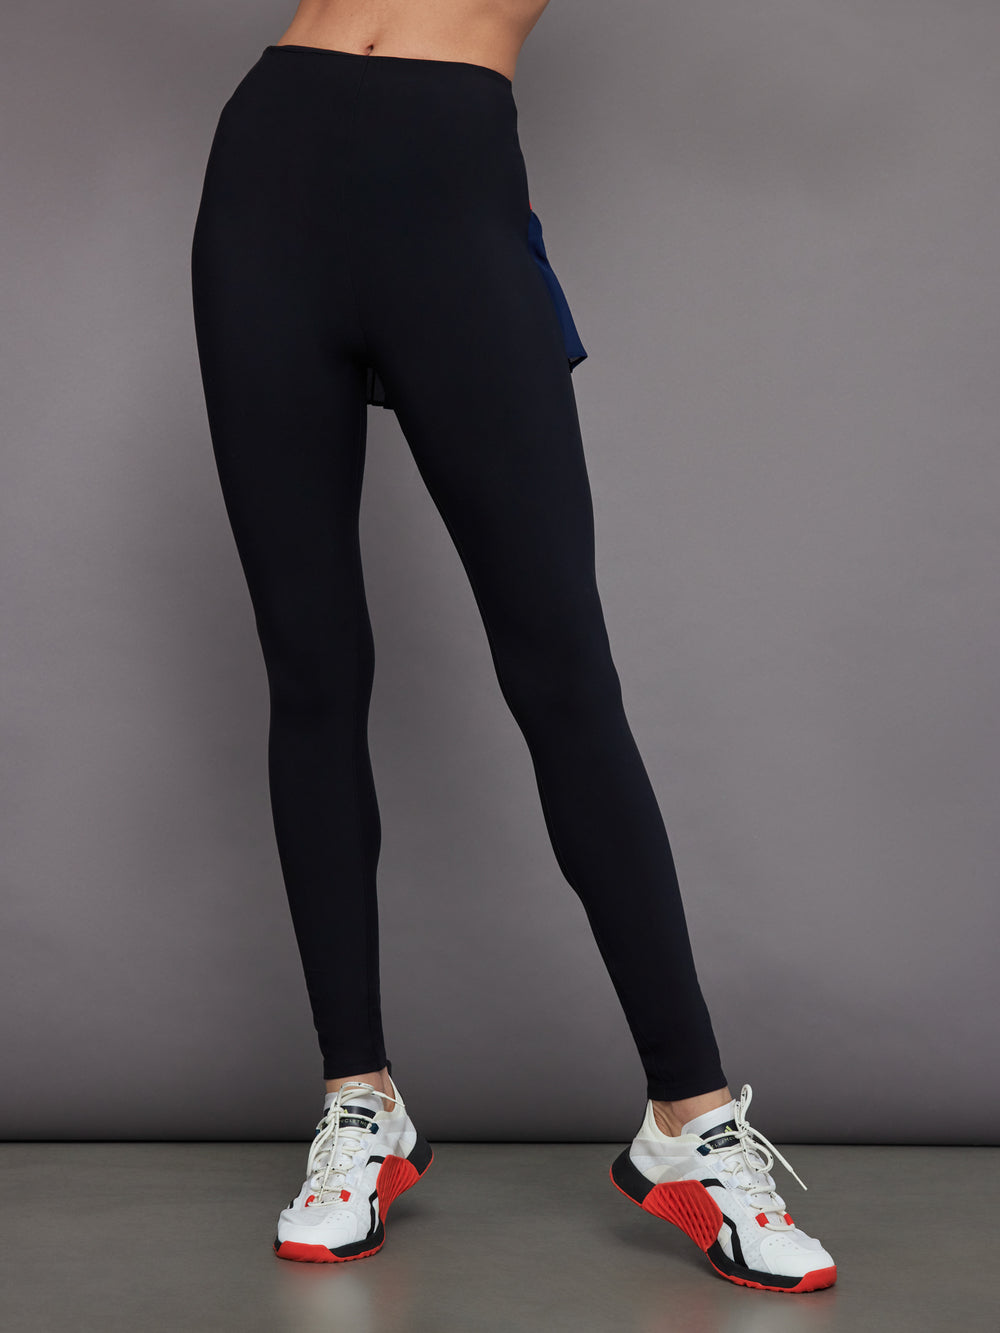 Carbon38 Lace Up Contour Legging  Athletic attire, Fitness fashion, Nude  leggings